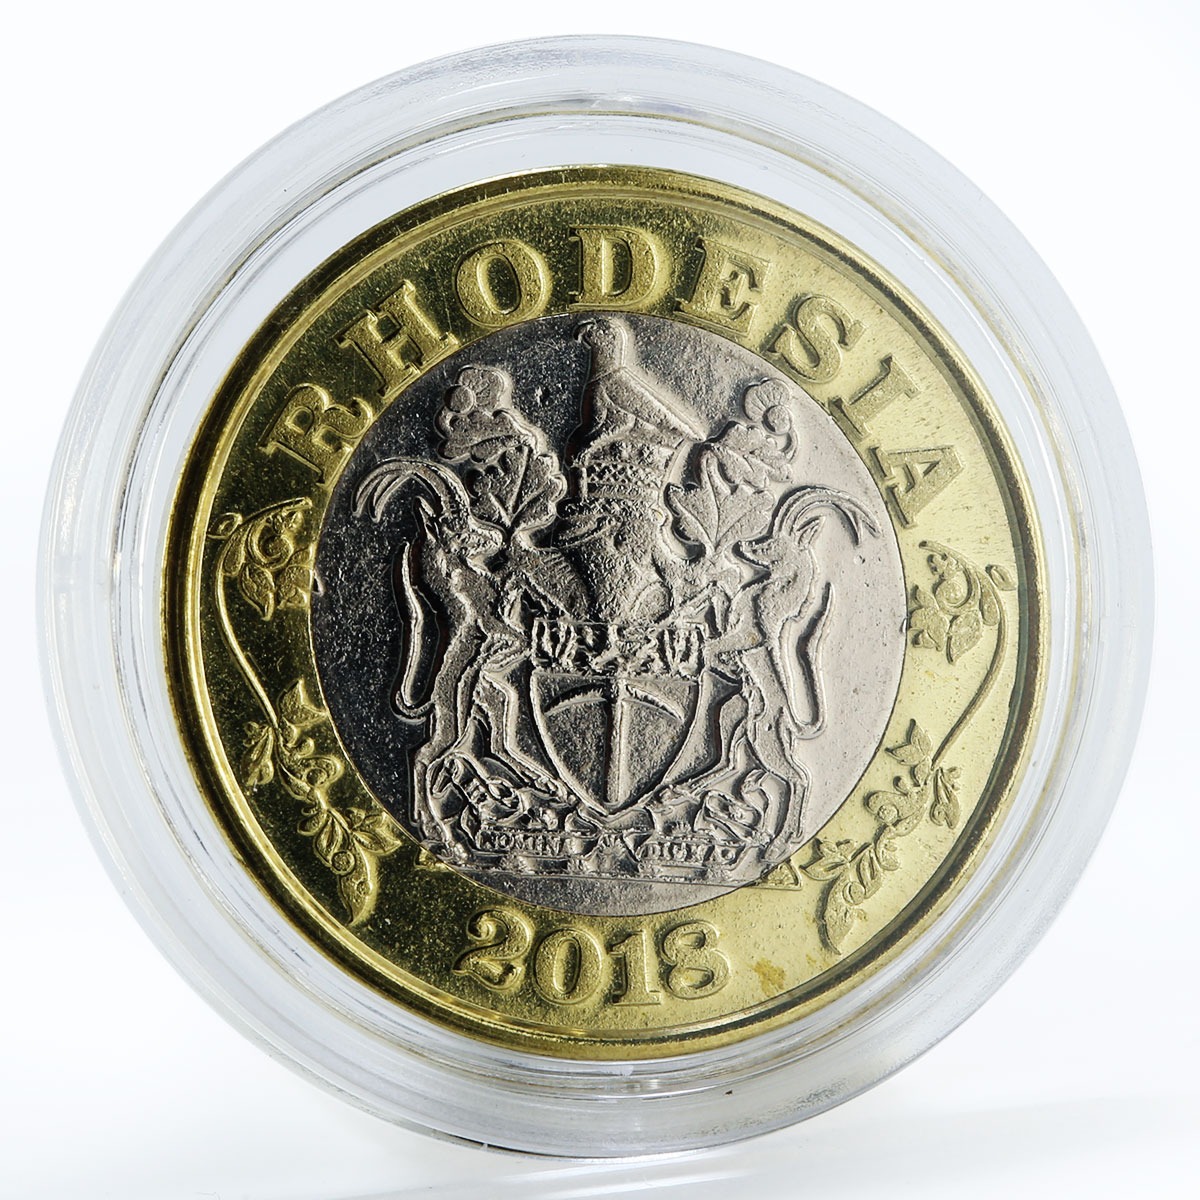 Rhodesia 5 dollars Tarchia bimetal coin 2018